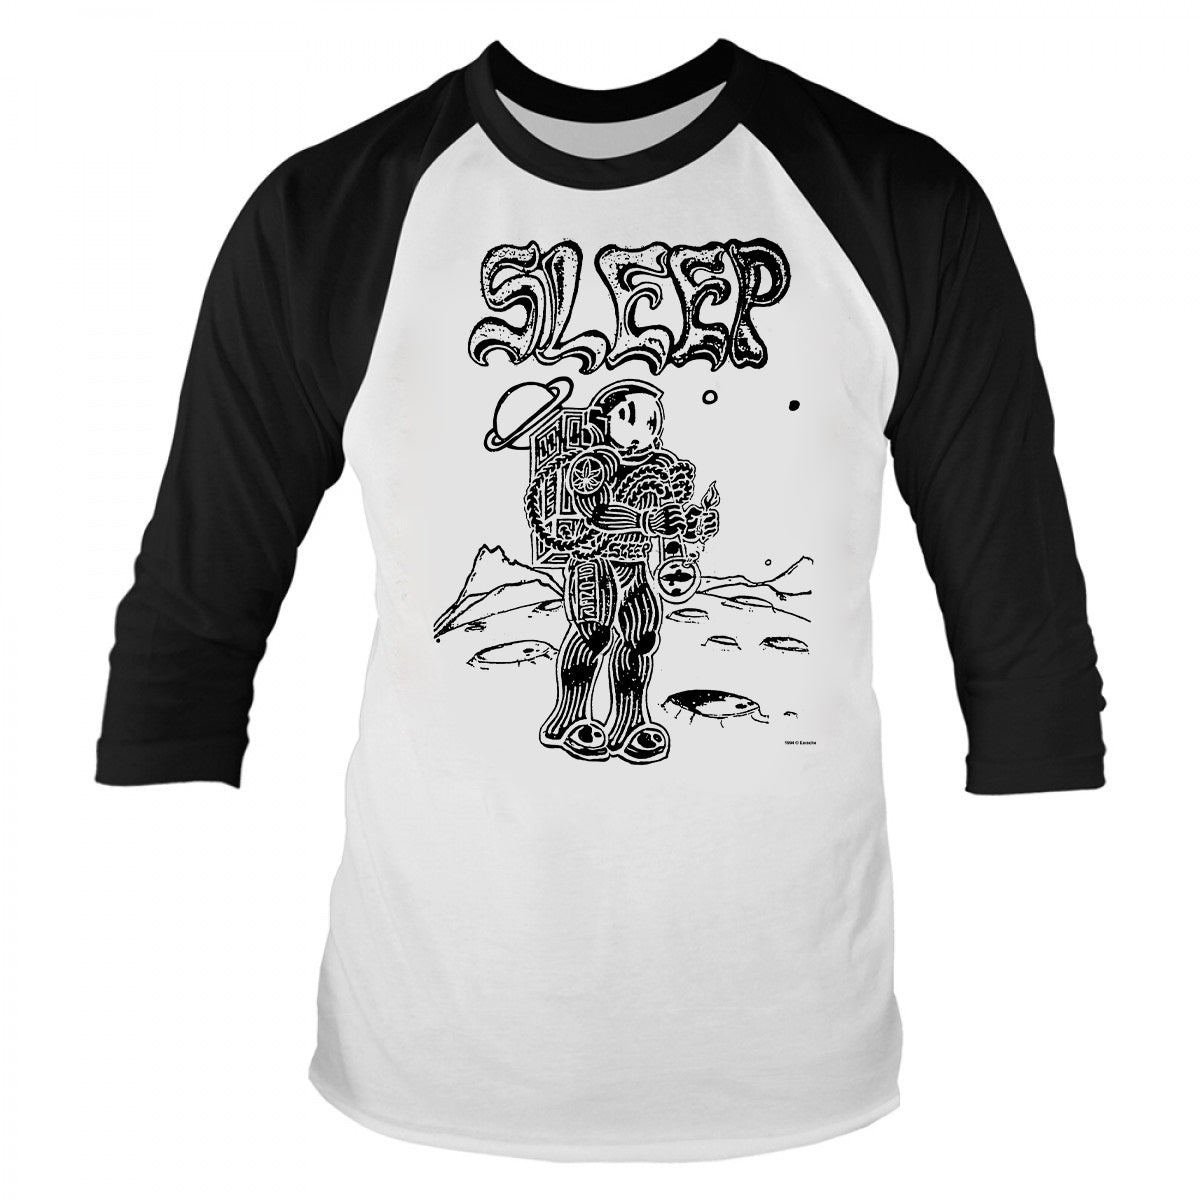 Sleep "Astronaut" Baseball T shirt